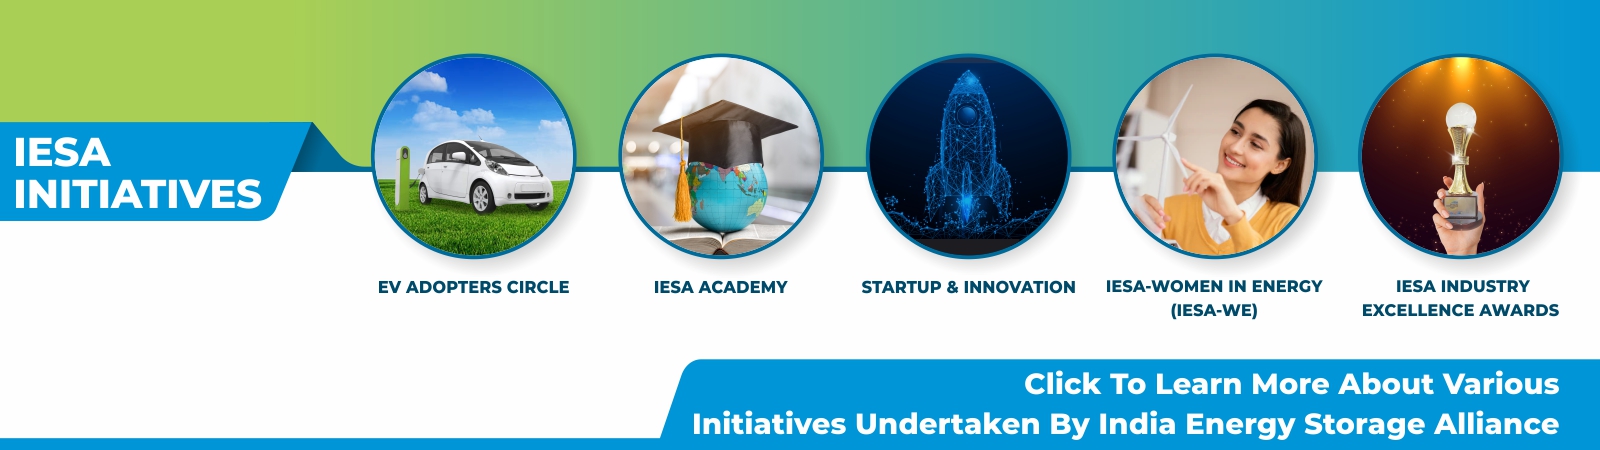 IESA Initiatives